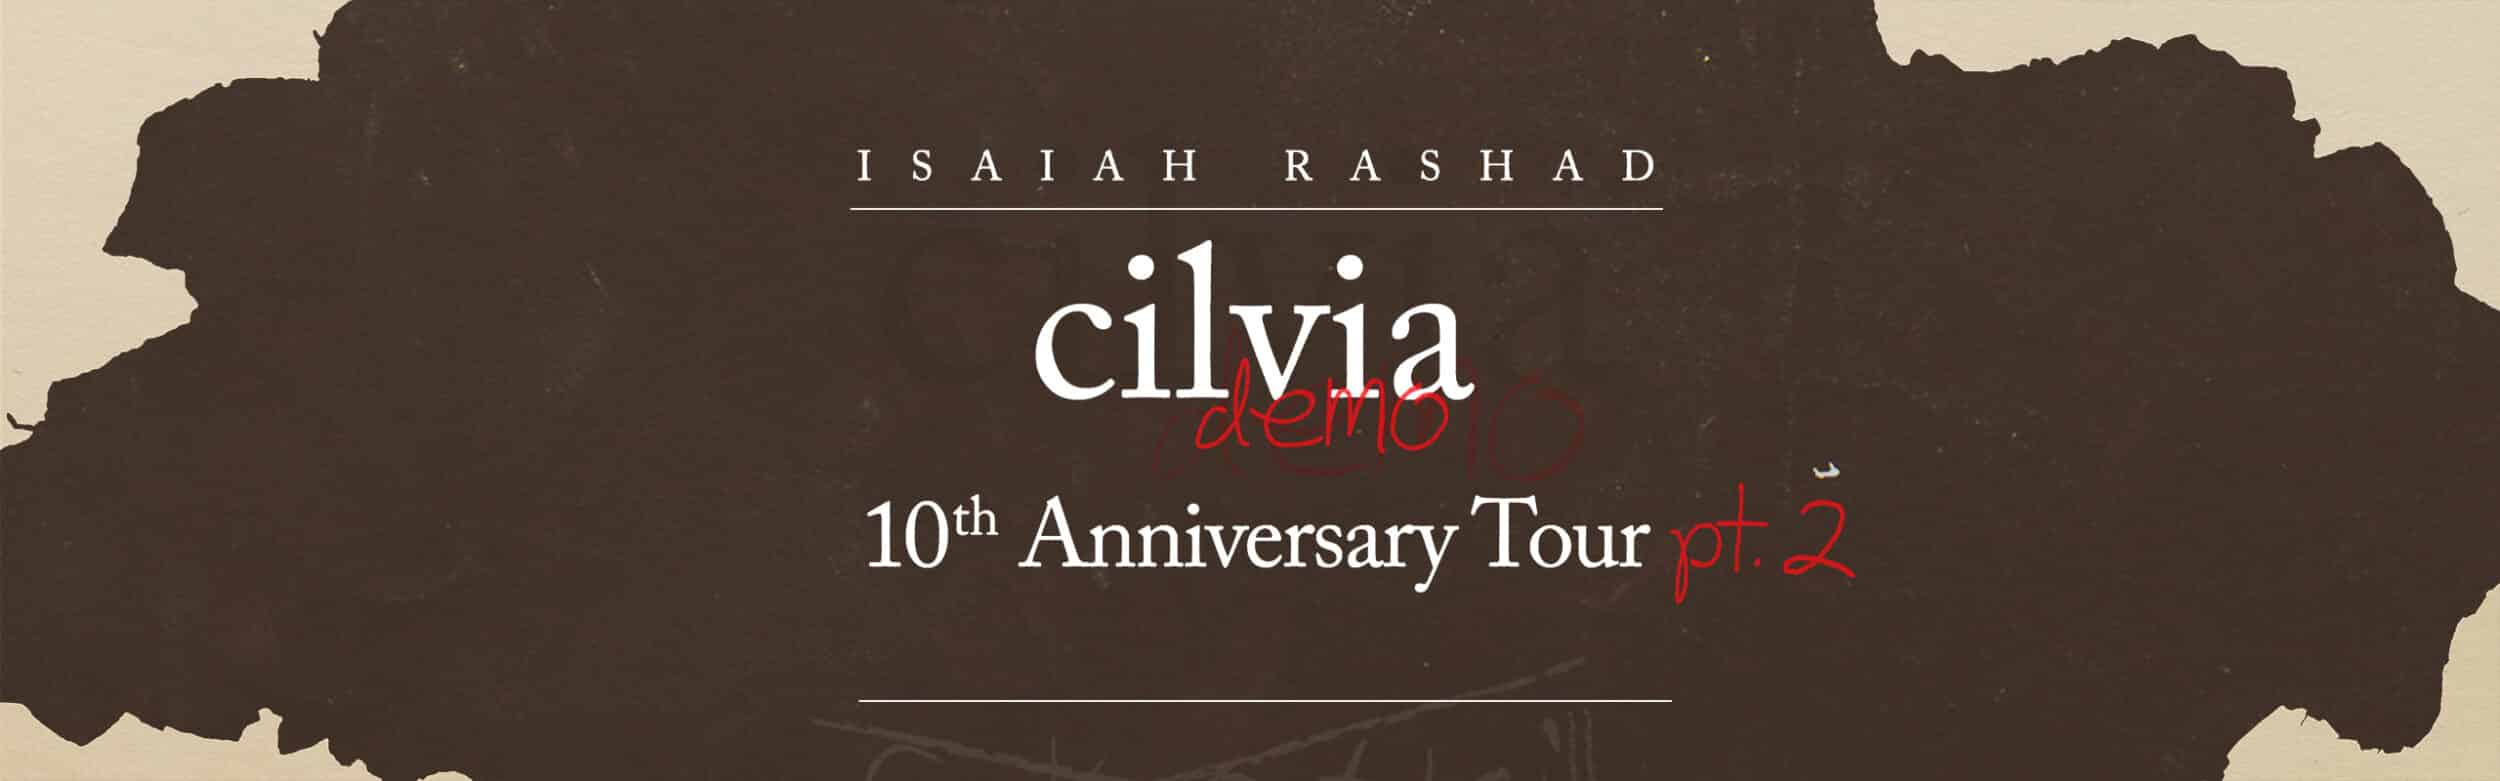 Isaiah Rashad – Cilvia Demo 10th Anniversary Tour